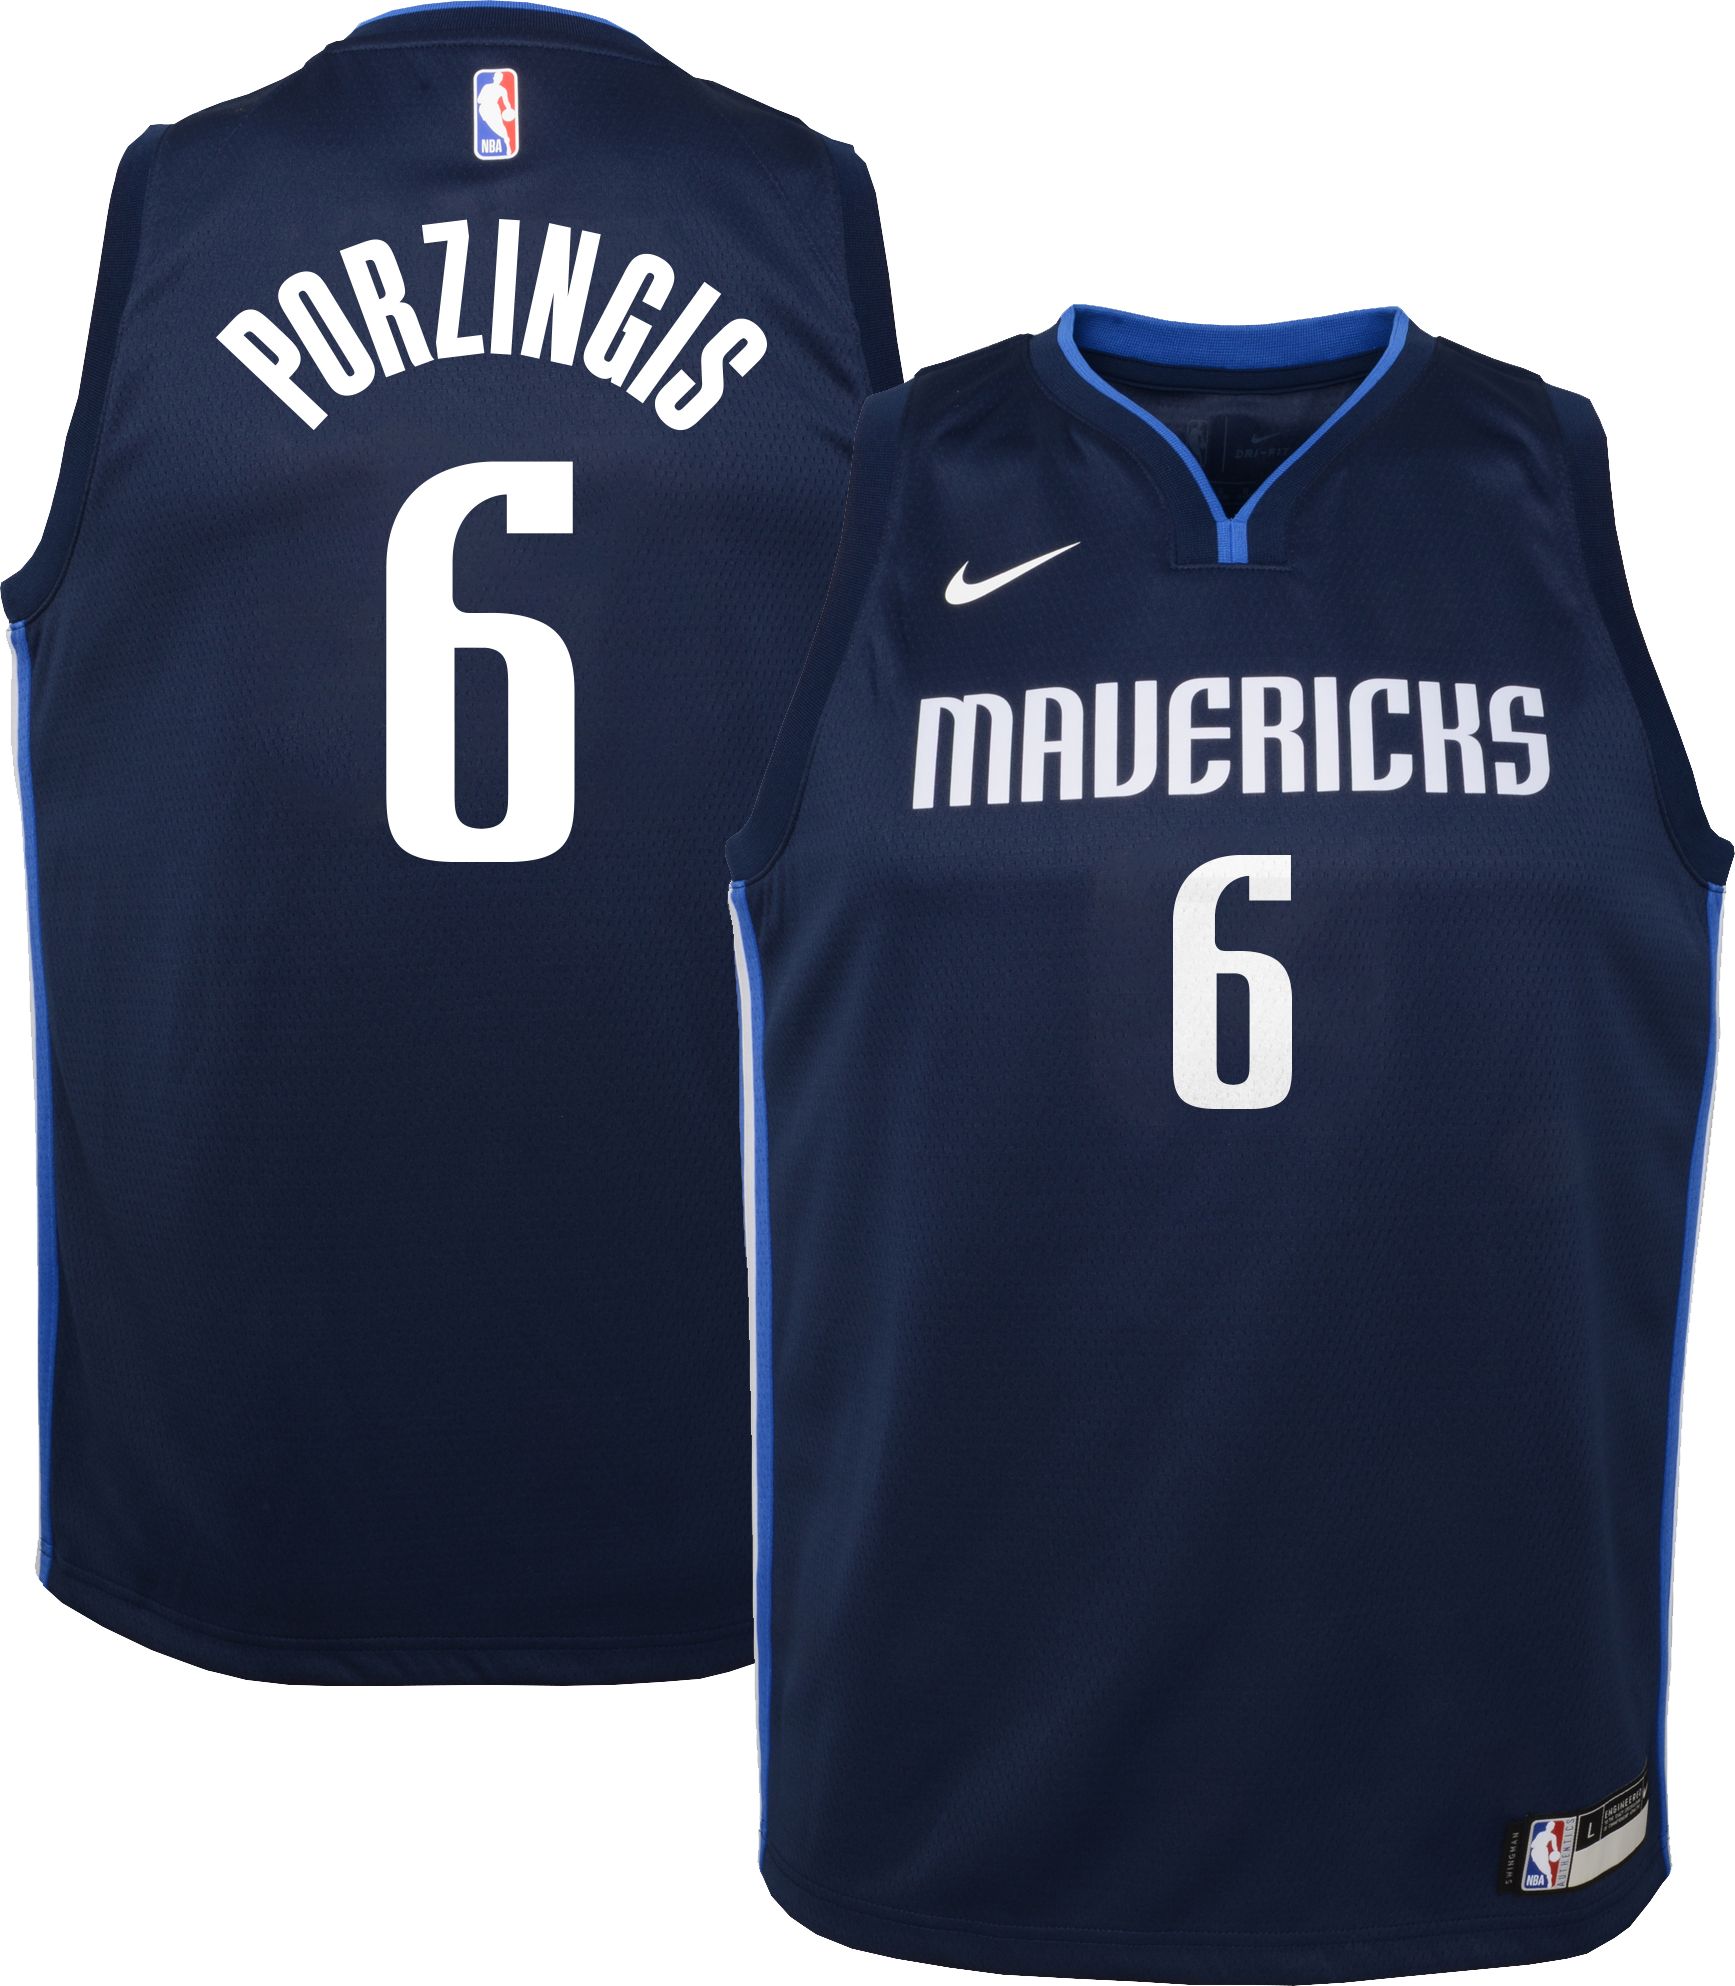 mavericks statement jersey